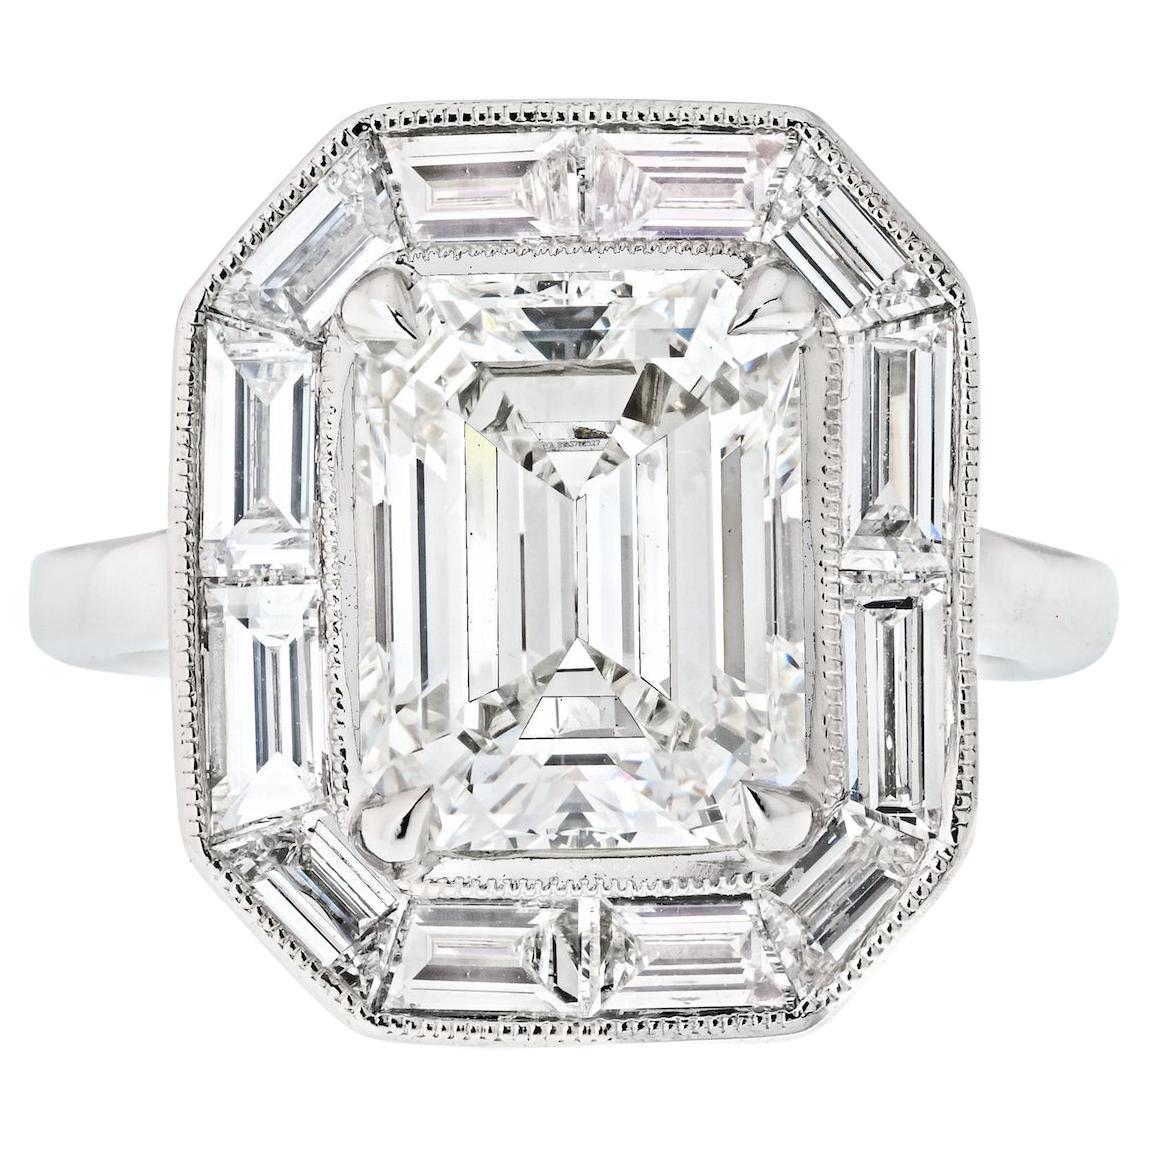 4 Carat Emerald Cut Diamond GIA Certified Engagement Ring